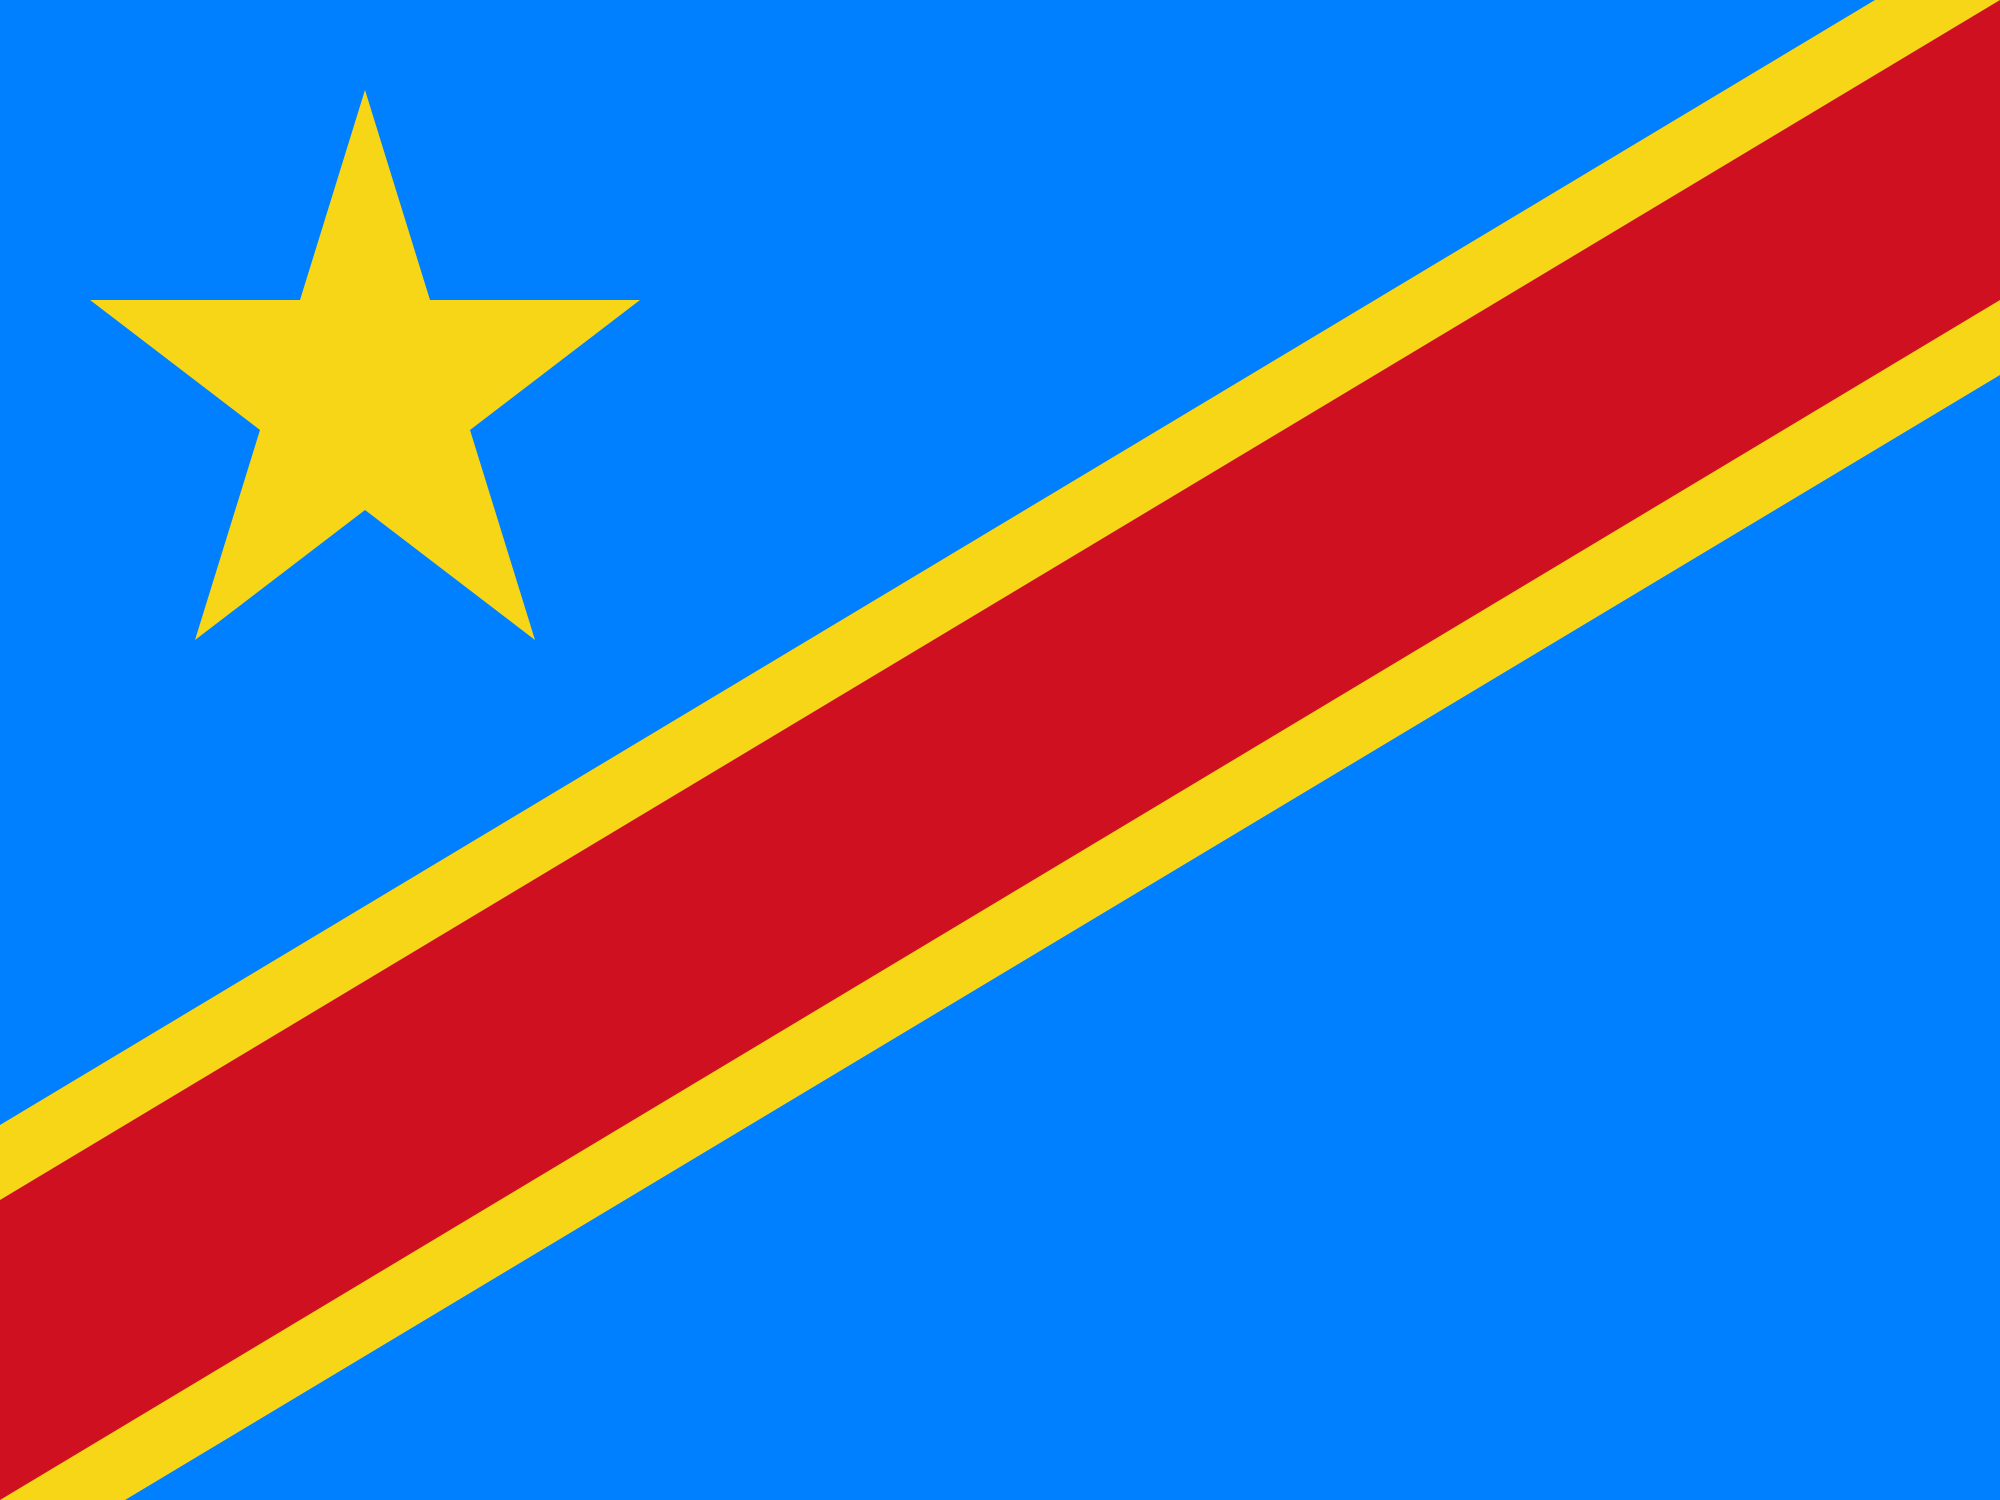 Democratic Republic of Congo court lifts former PM's house arrest 